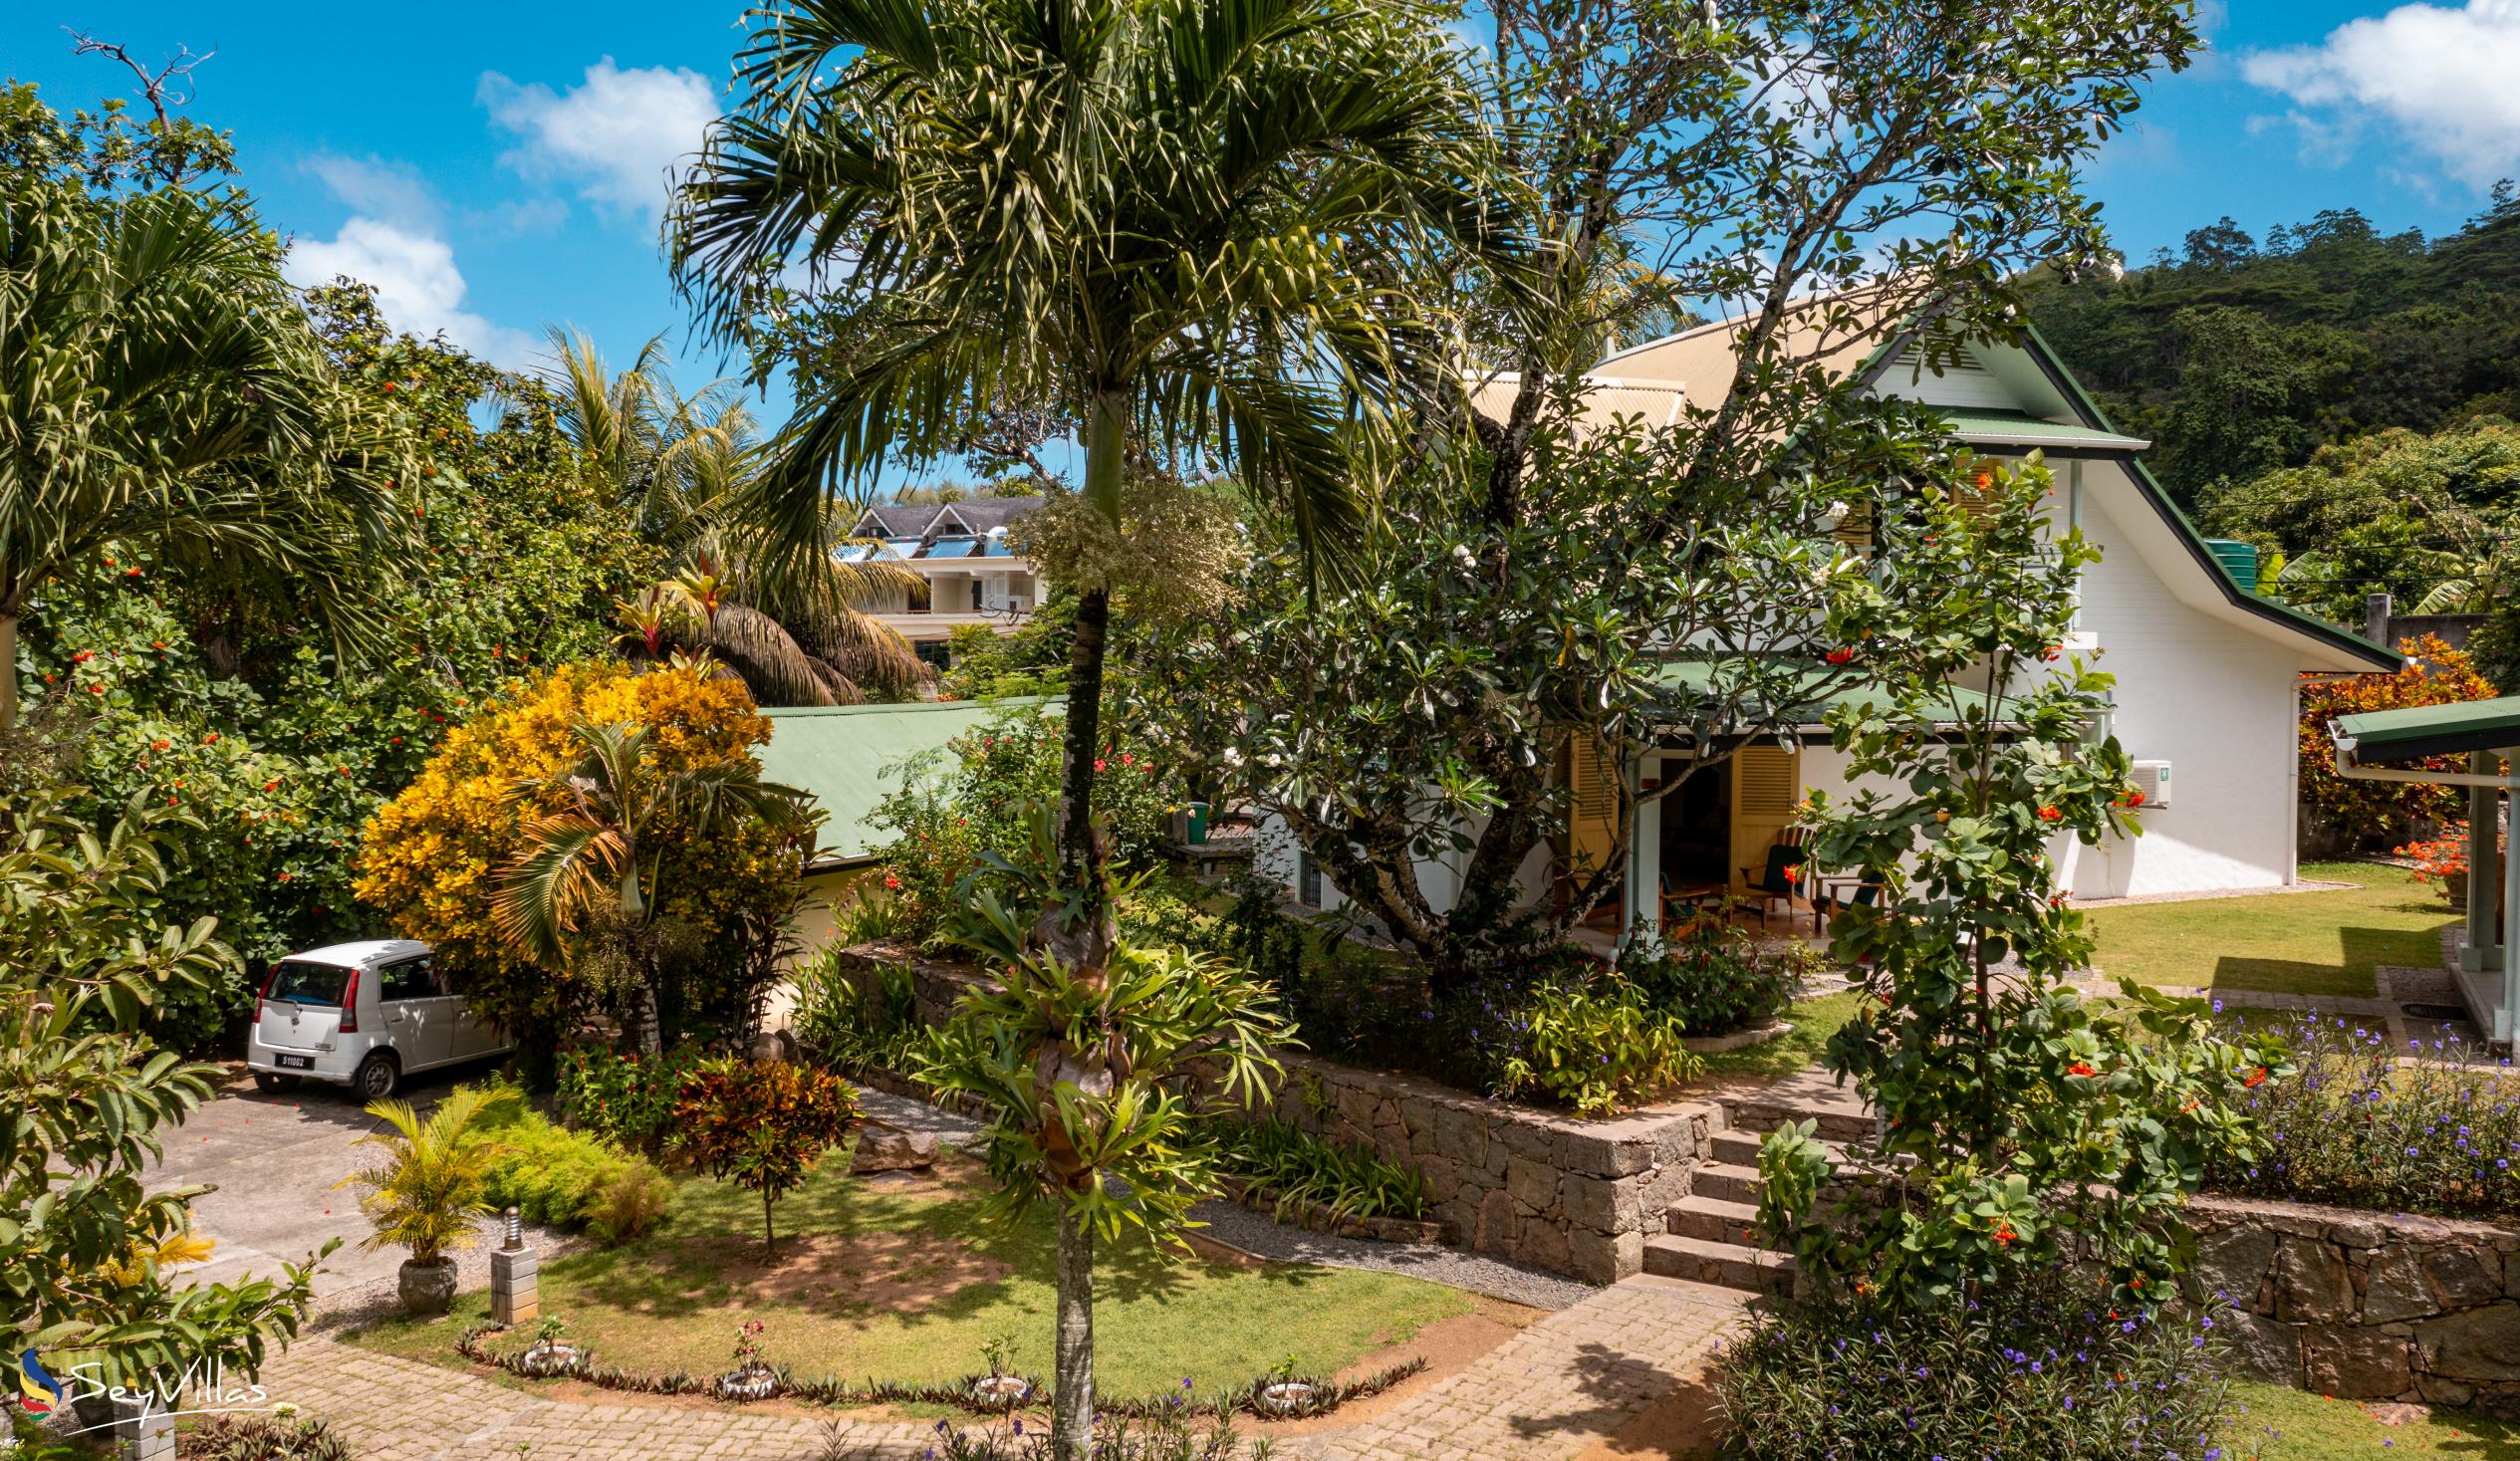 Foto 8: Villa Kordia - Aussenbereich - Mahé (Seychellen)